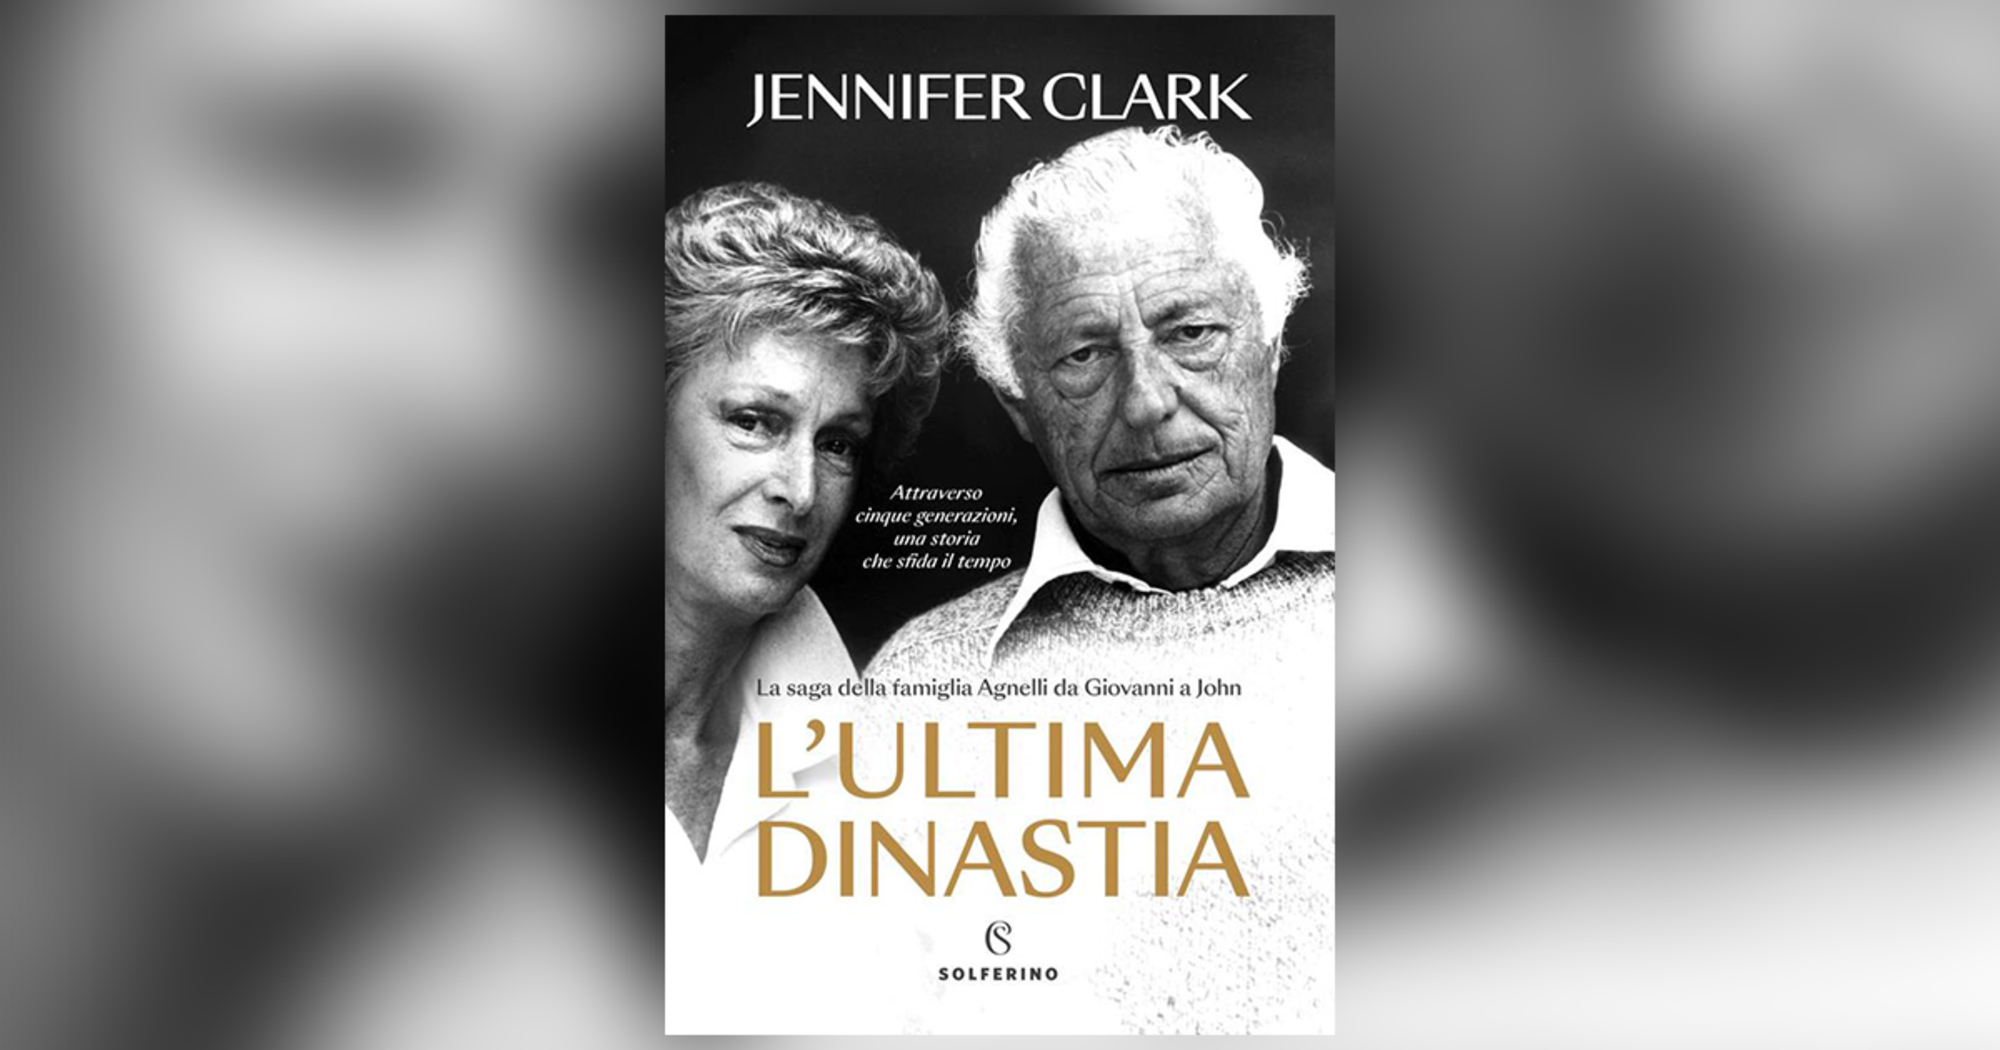 La copertina del libro di Jennifer Clark